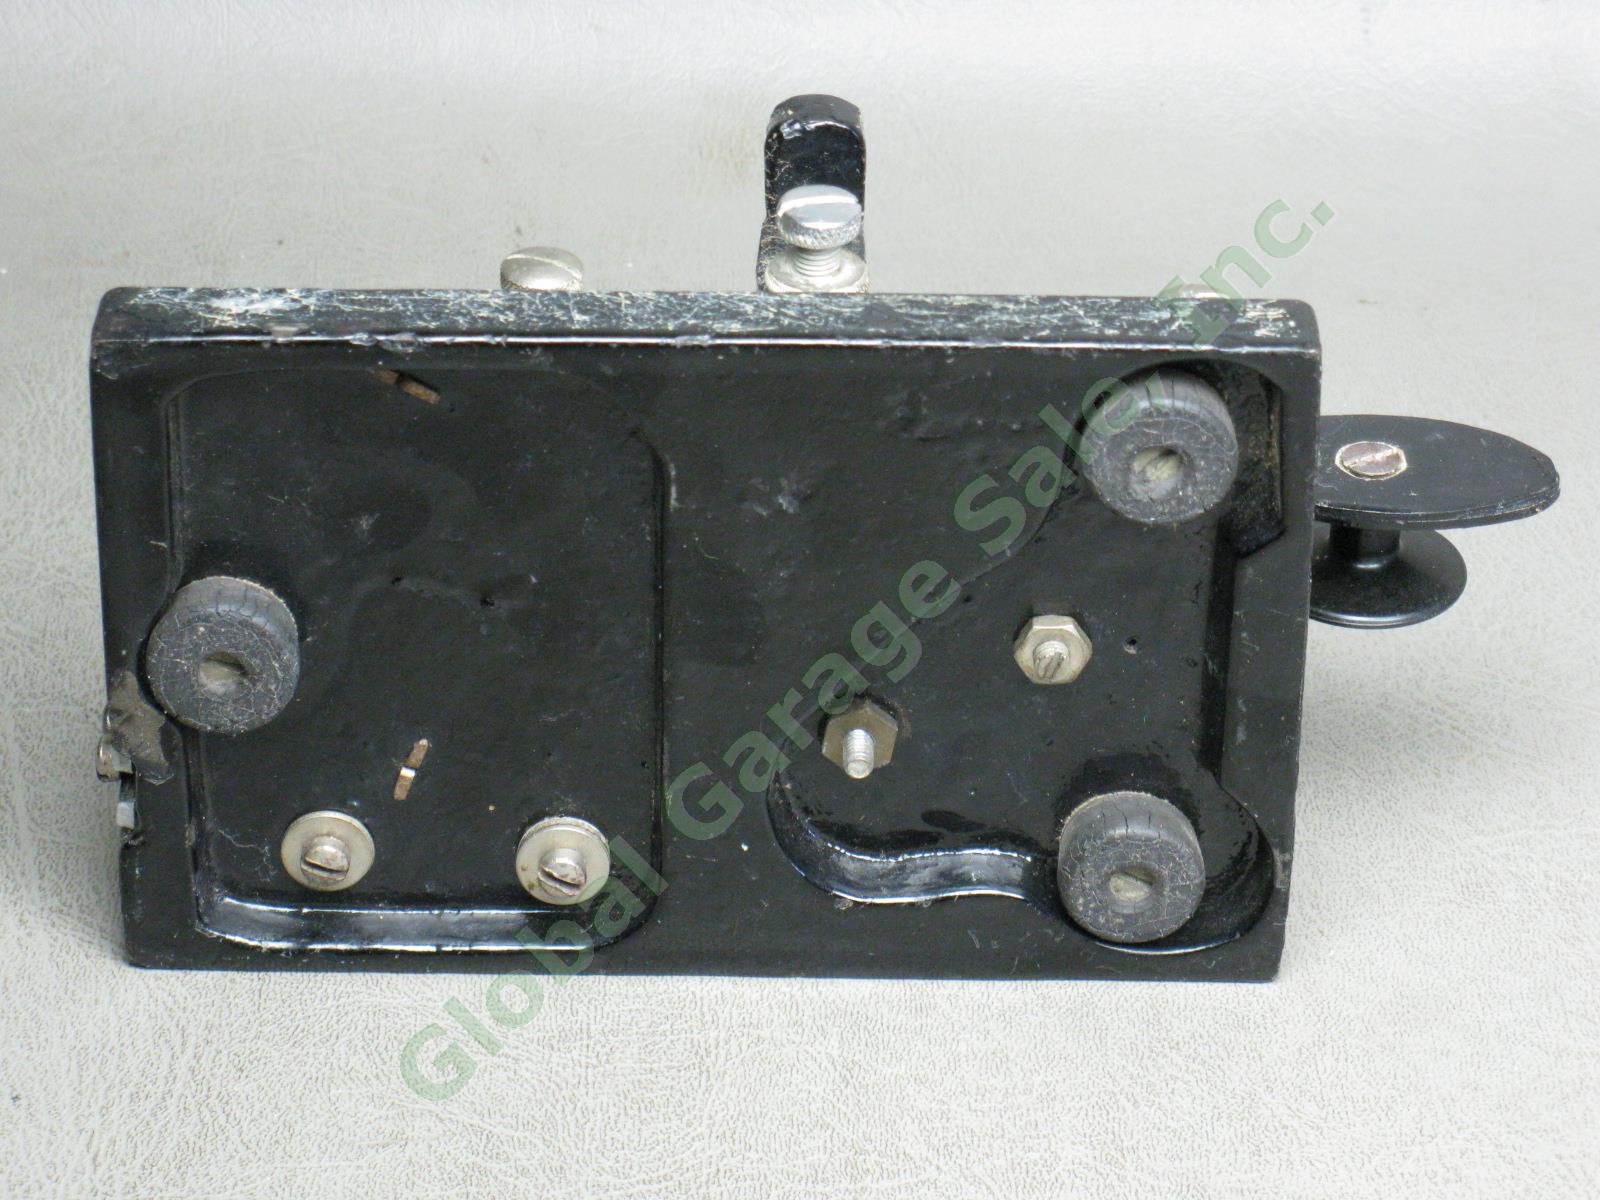 Vtg McElroy Radio Telegraph Transmitting Deluxe Mac Key Marble Base Morse Code 7